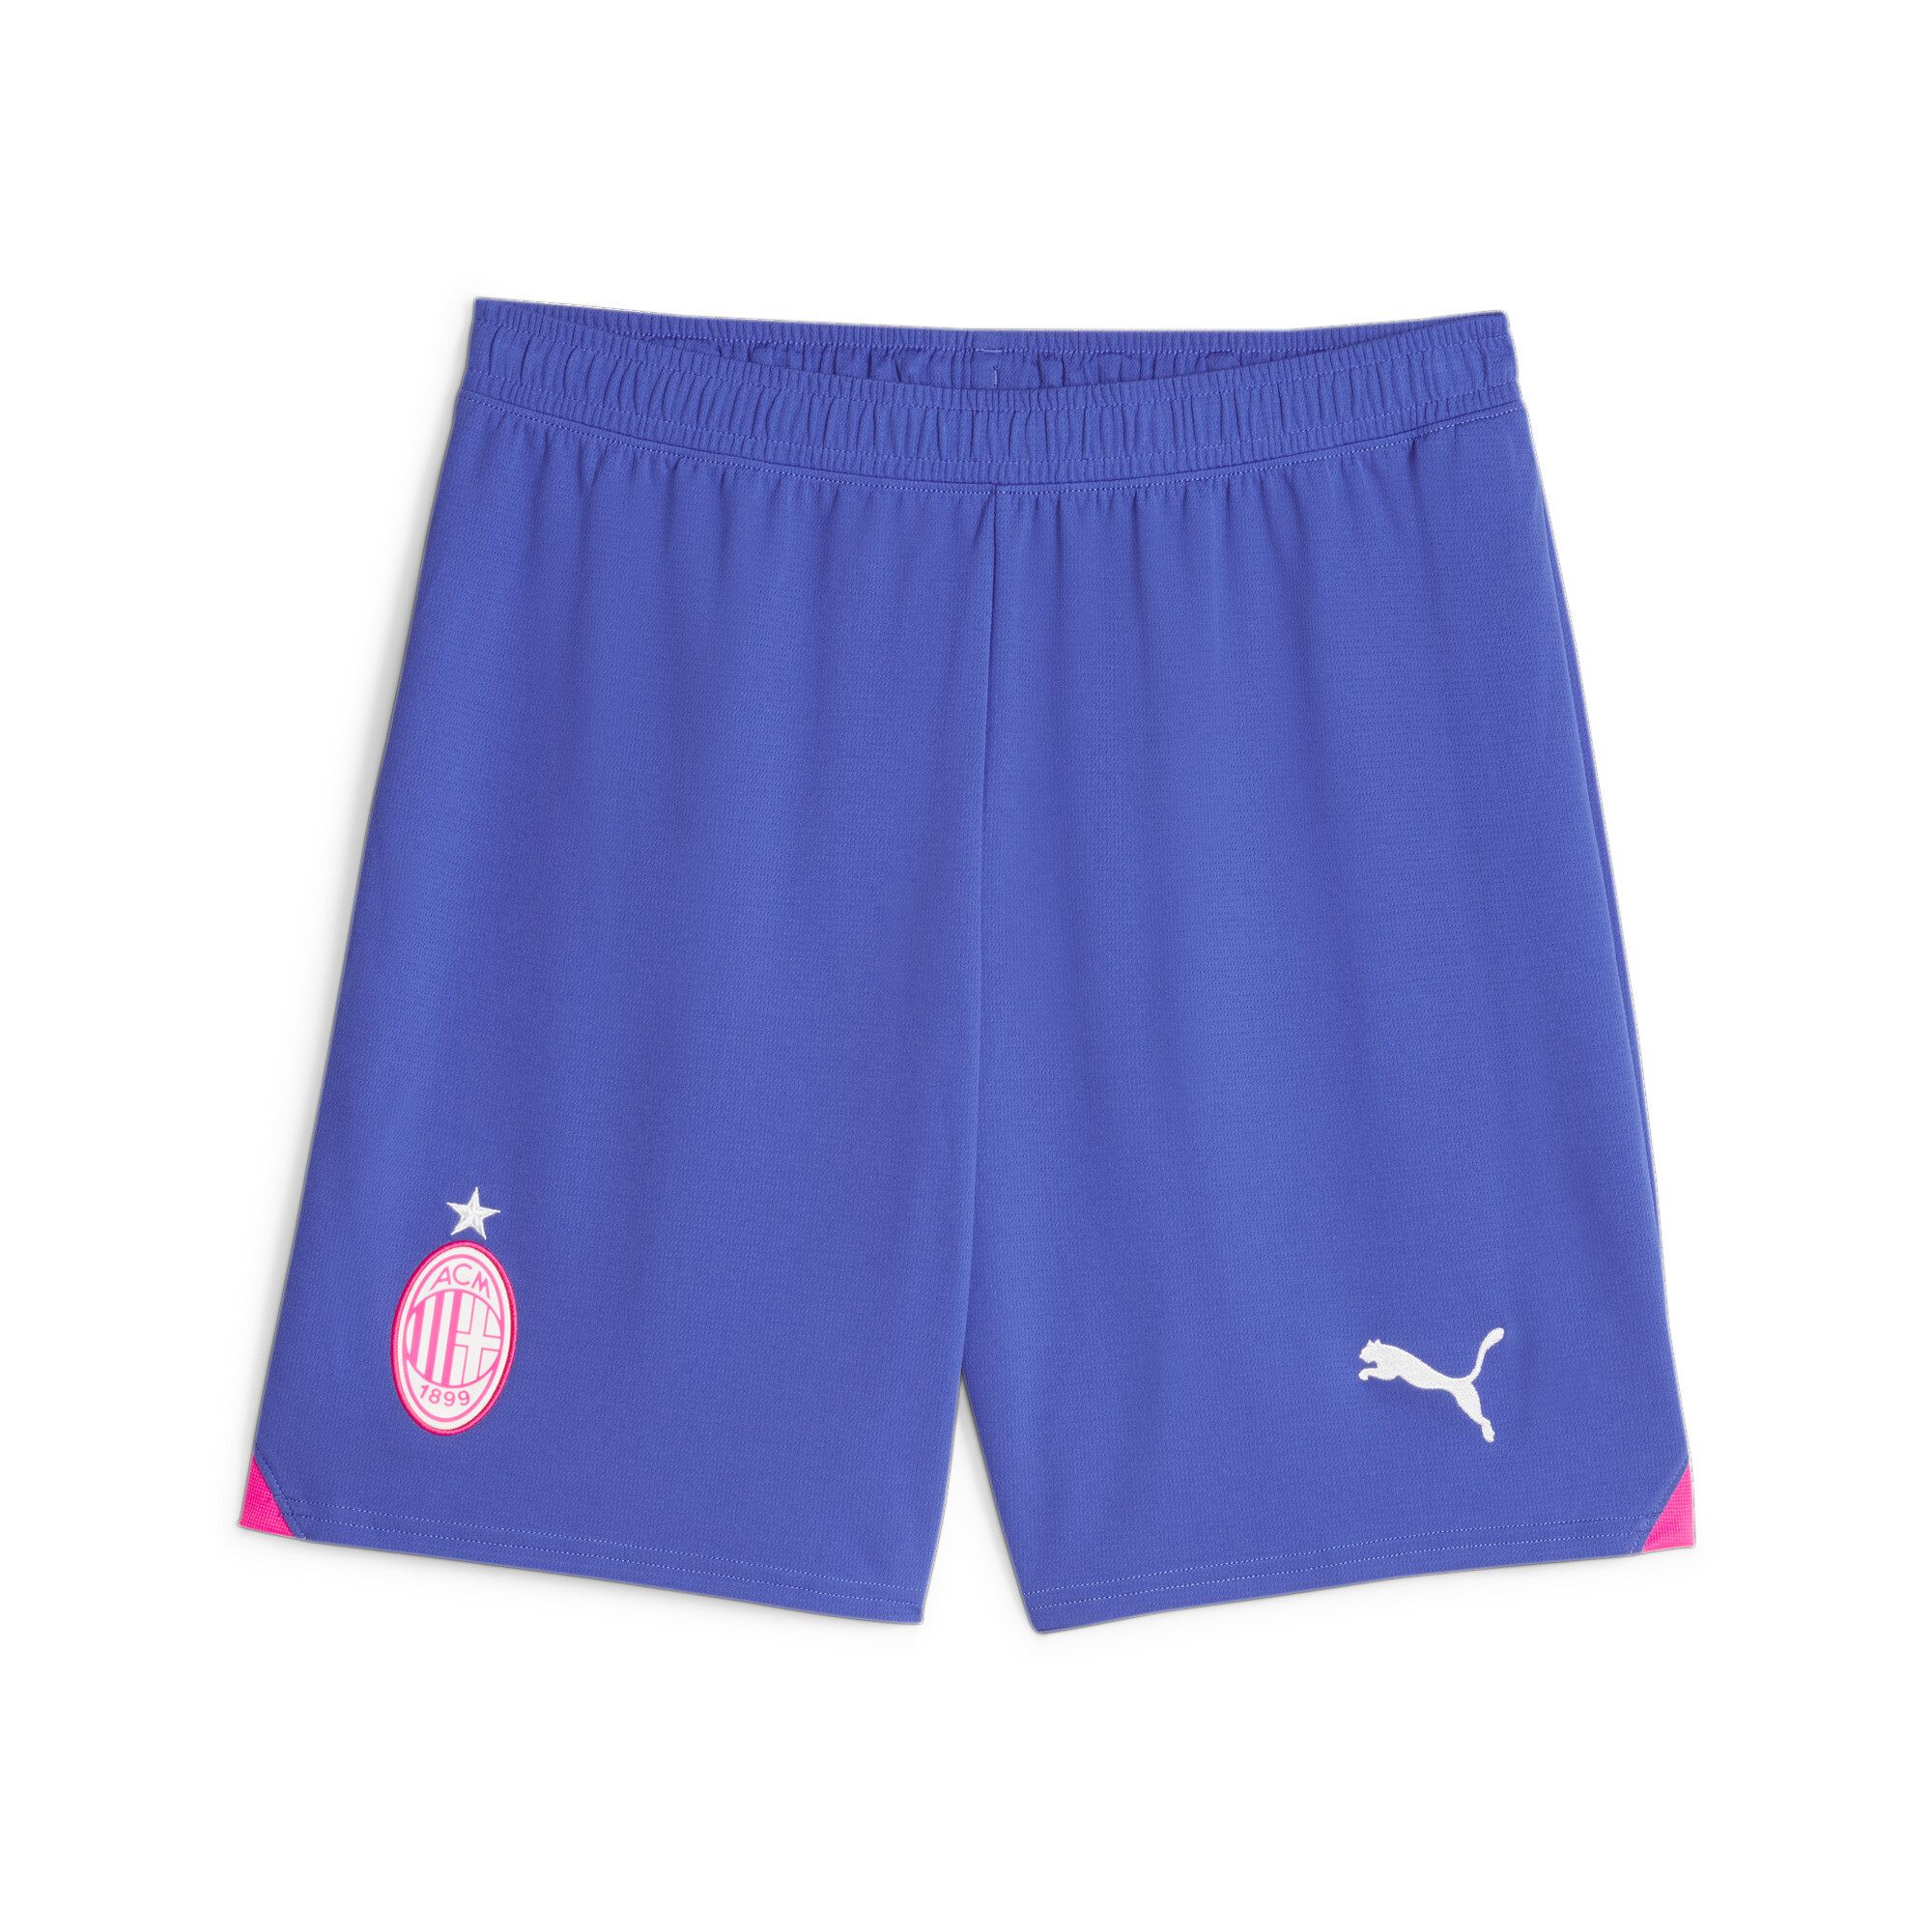 Men's PUMA AC Milan Football Shorts In Blue, Size Medium